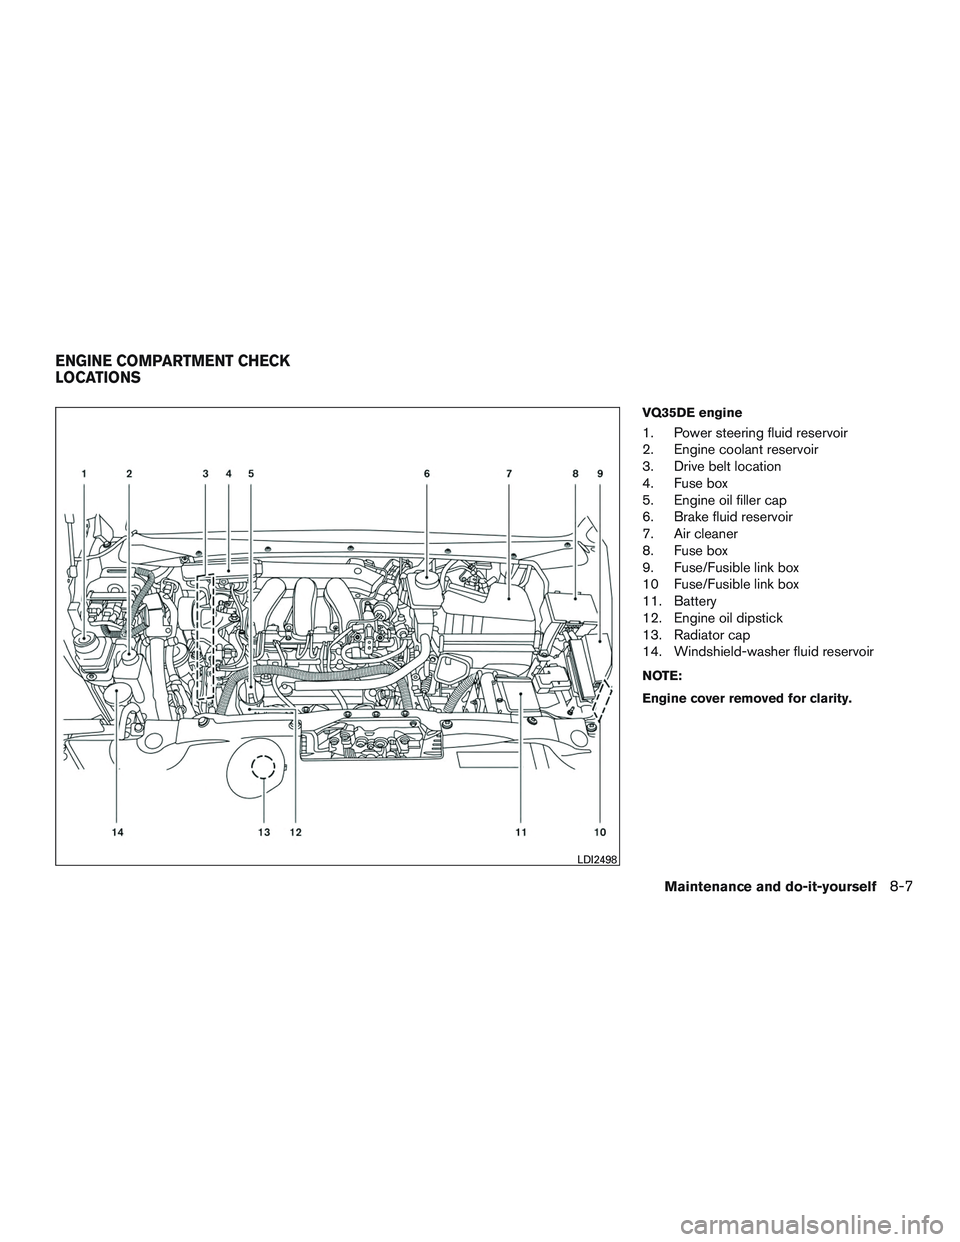 INFINITI QX60 2016  Owners Manual VQ35DE engine
1. Power steering fluid reservoir
2. Engine coolant reservoir
3. Drive belt location
4. Fuse box
5. Engine oil filler cap
6. Brake fluid reservoir
7. Air cleaner
8. Fuse box
9. Fuse/Fusi